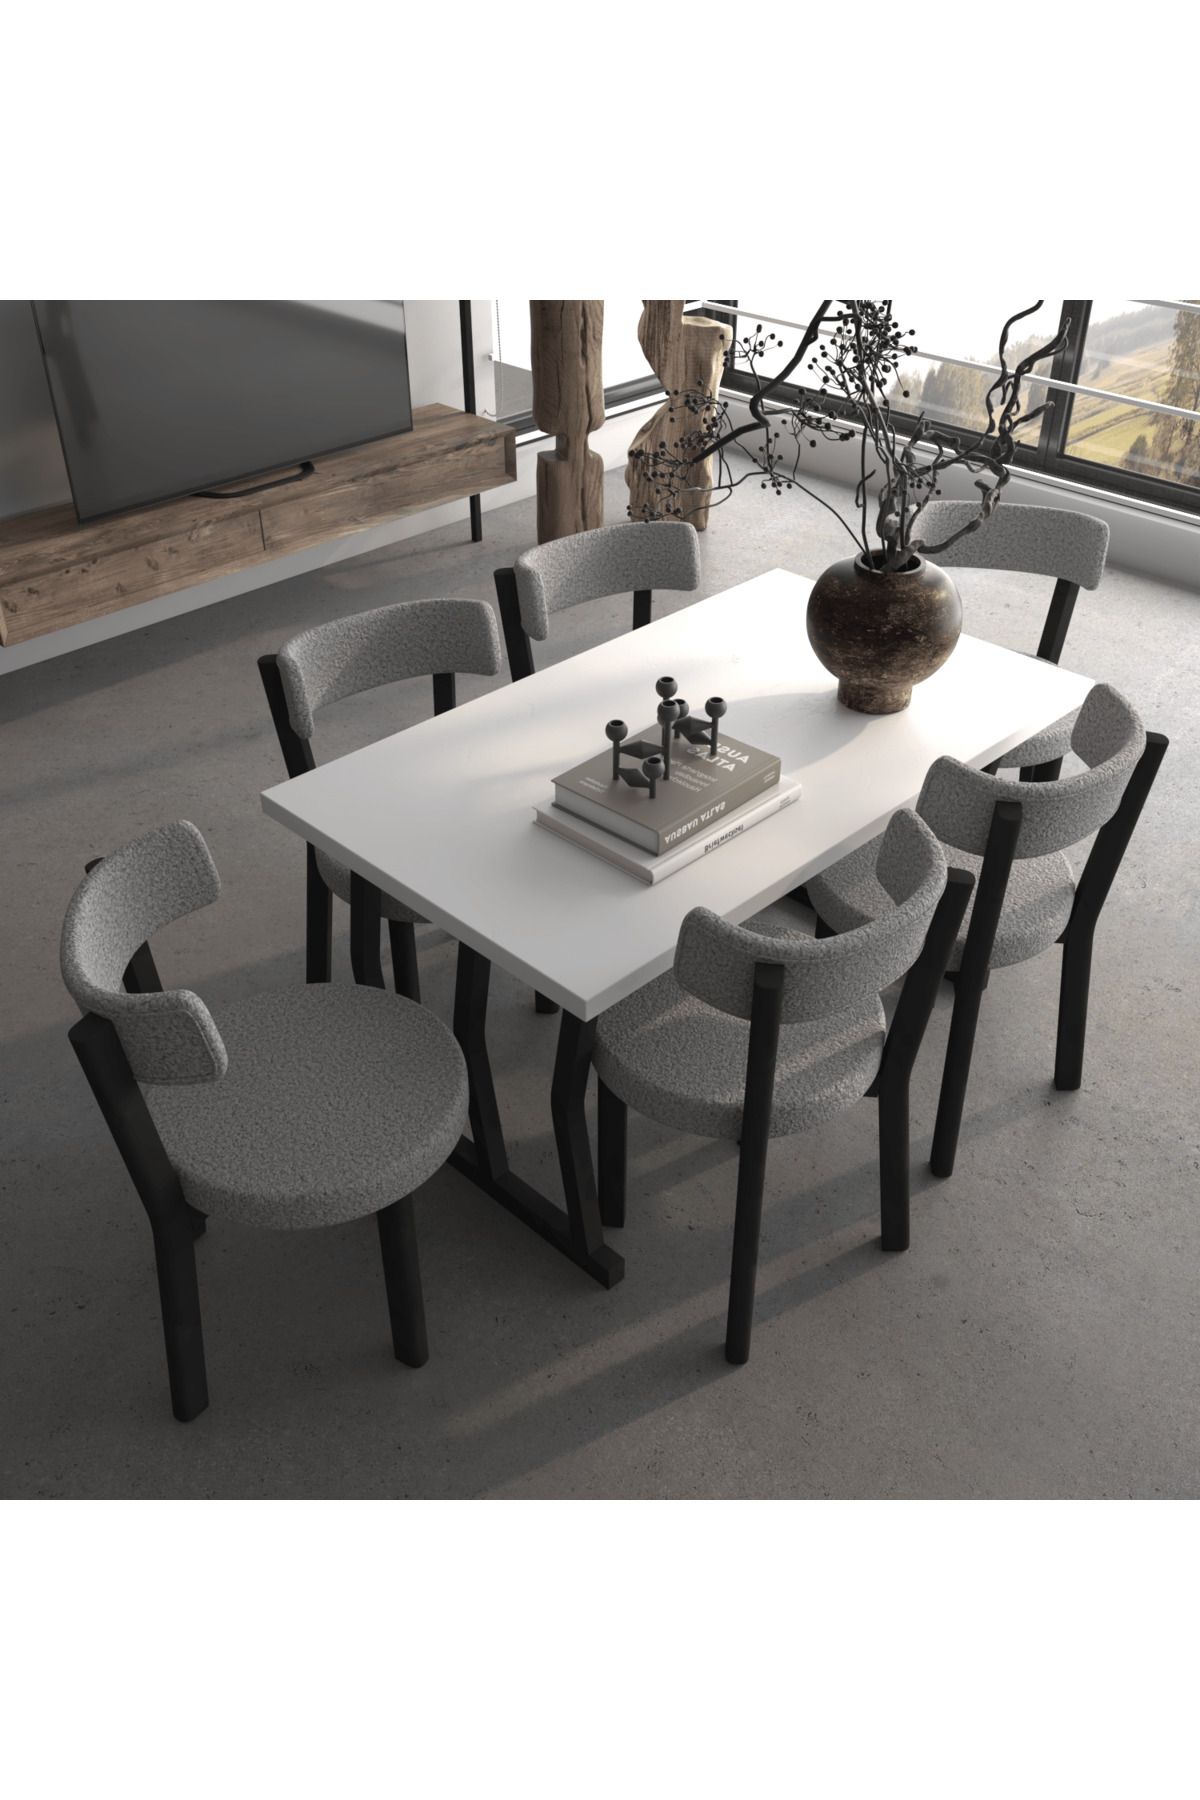 MODEV HOME Modev Star Masa Sandalye 80x140 Yemek Masası Mutfak Masası 6 Kişilik Masa Sandalye Takımı